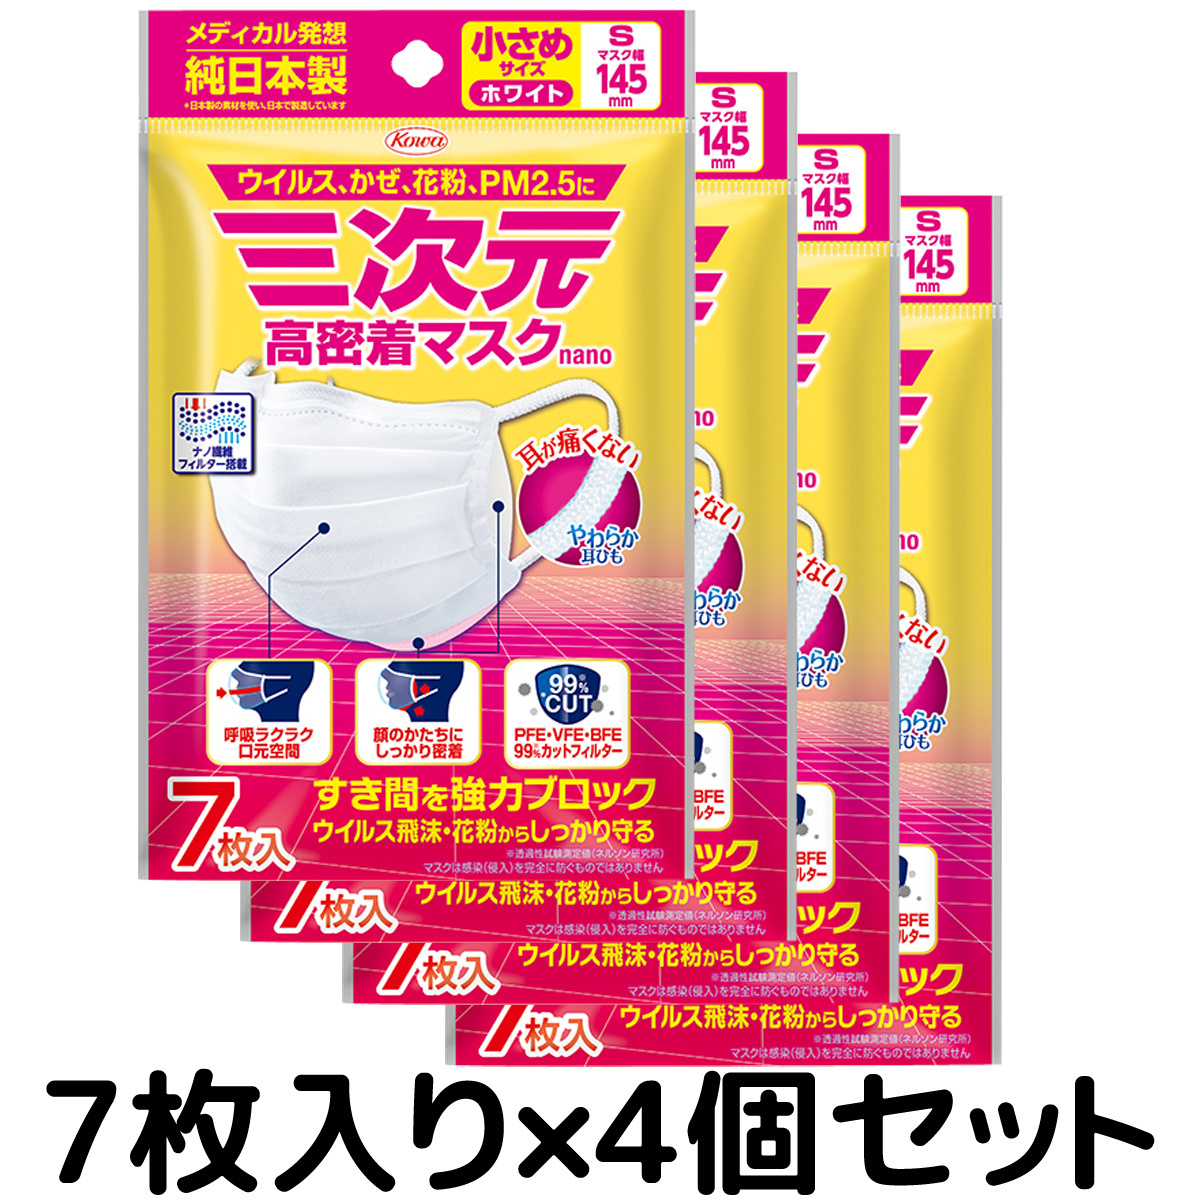 Kowa 興和 三次元 高密着マスクナノ 小さめSサイズ ホワイト 7枚入 × 4個 三次元マスク 衛生用品マスクの商品画像